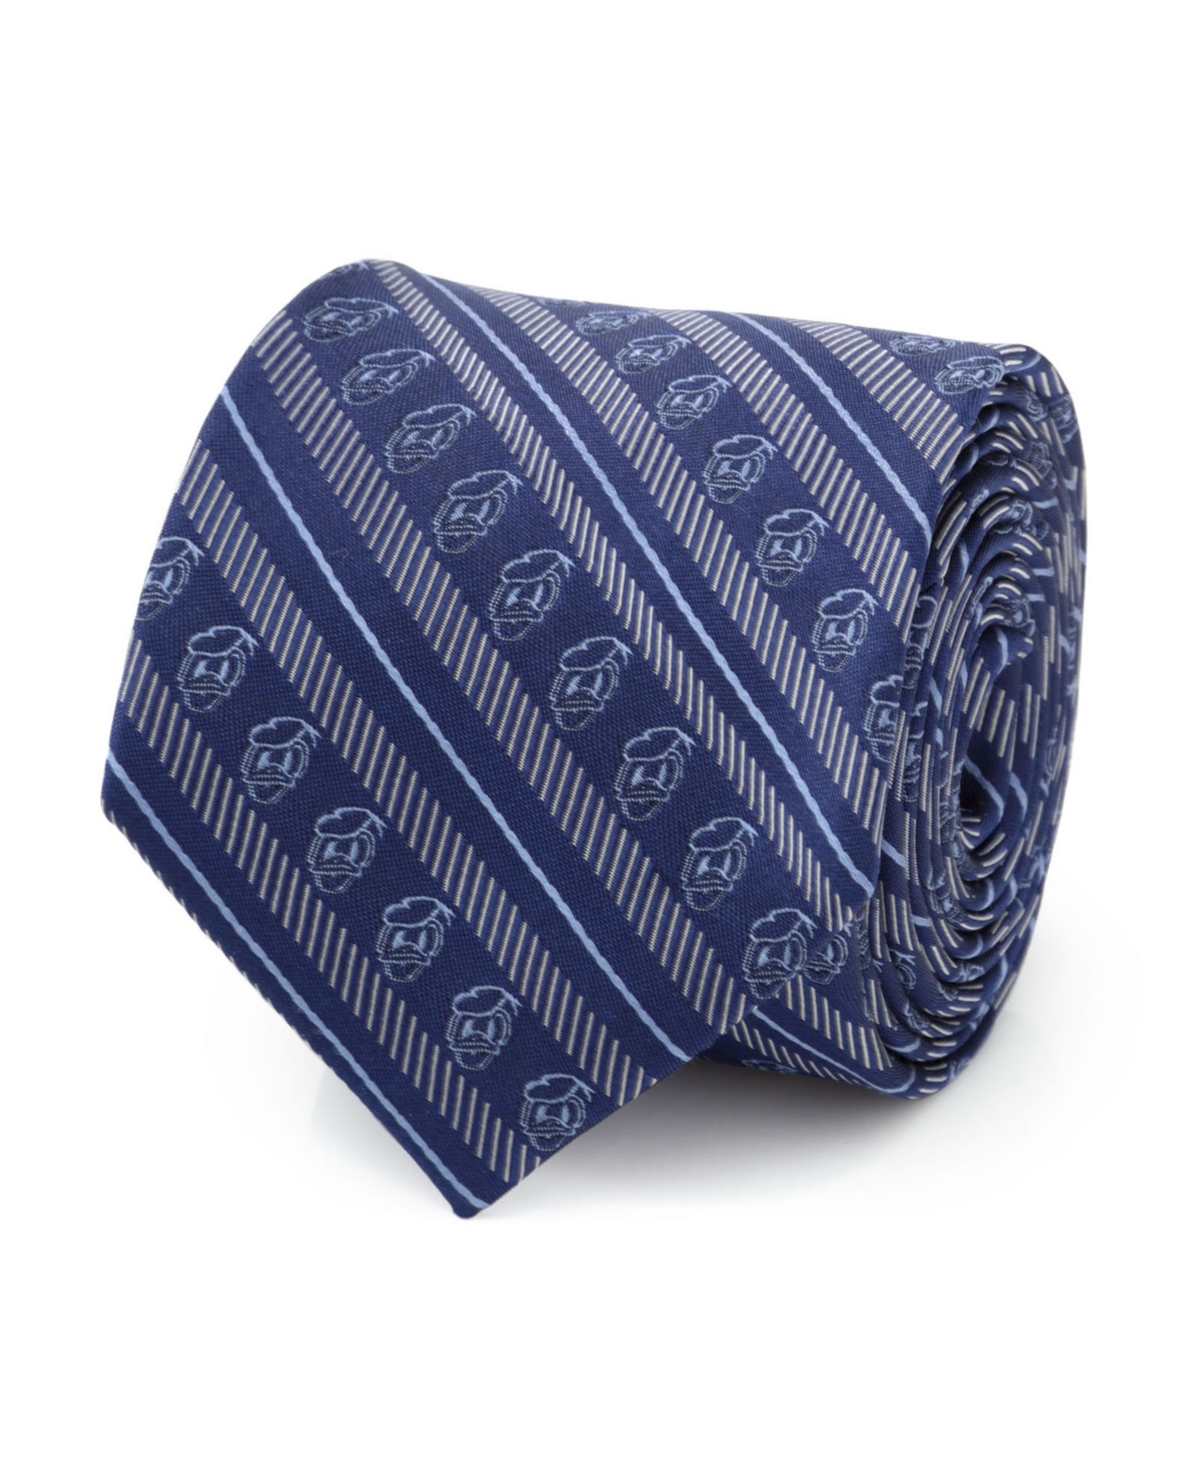 Men's Donald Duck Striped Tie - Blue